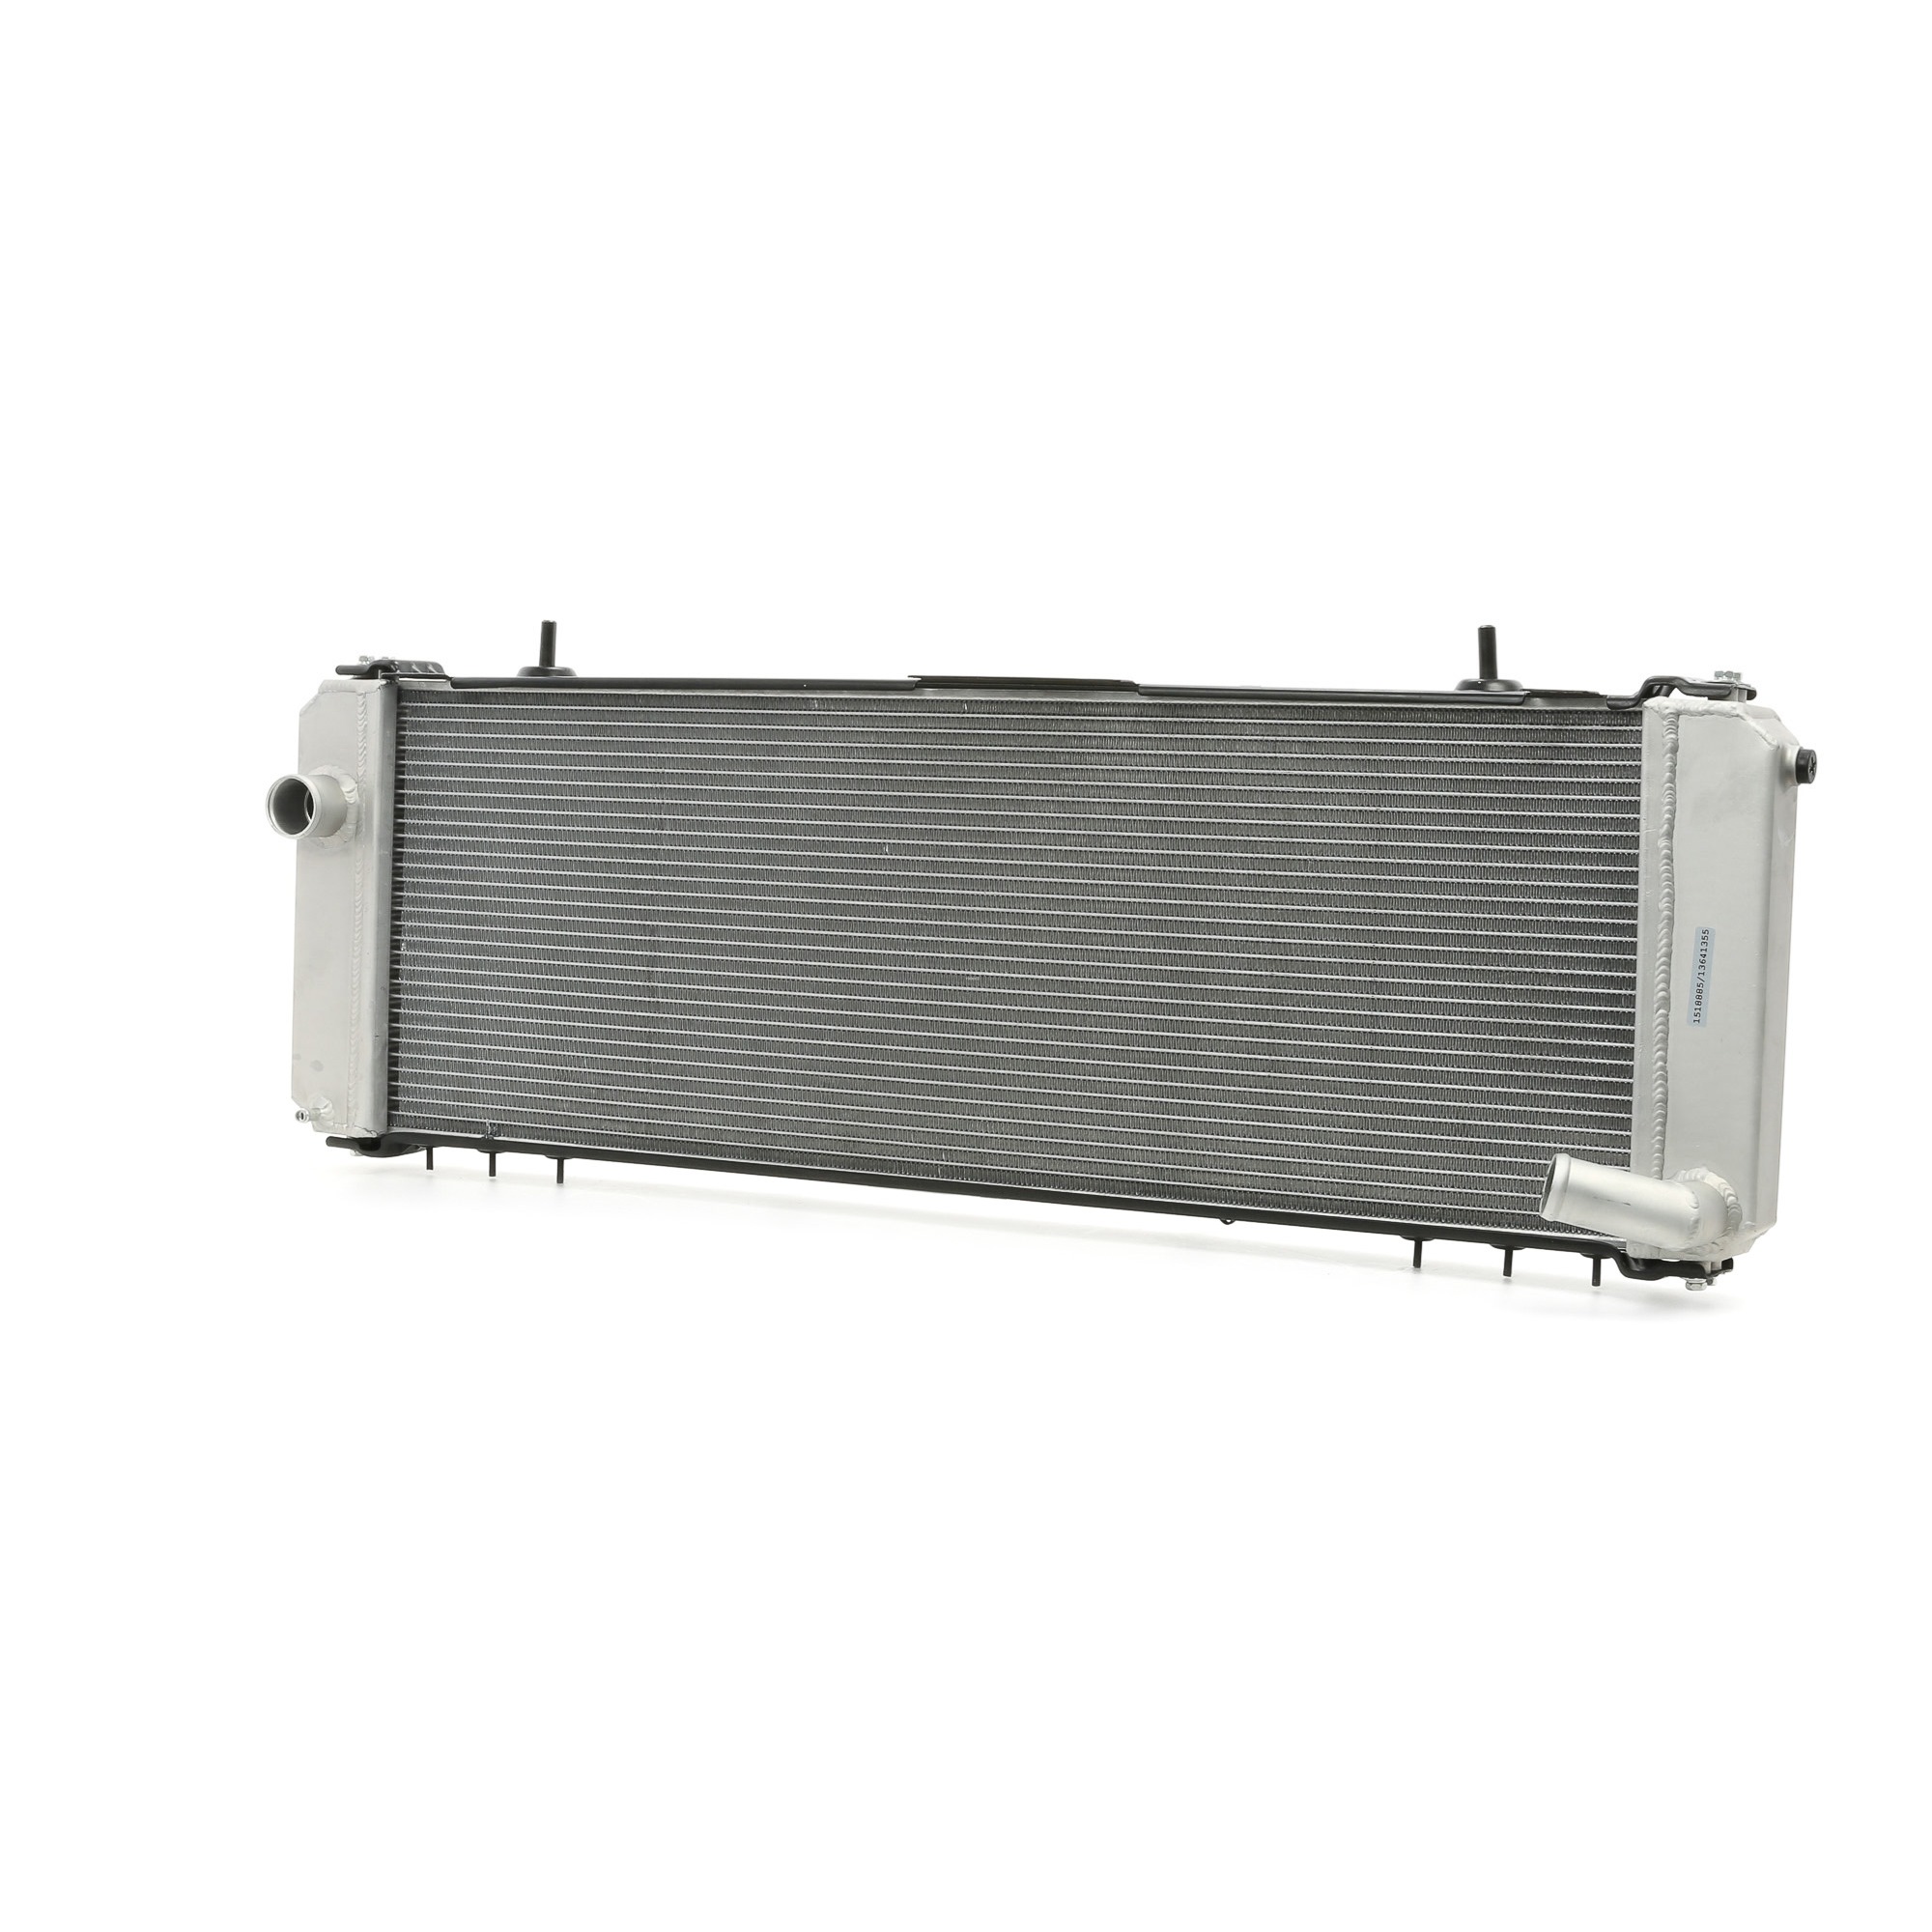 RIDEX 470R0395 Engine radiator Aluminium, 790 x 268 x 26 mm, Brazed cooling fins